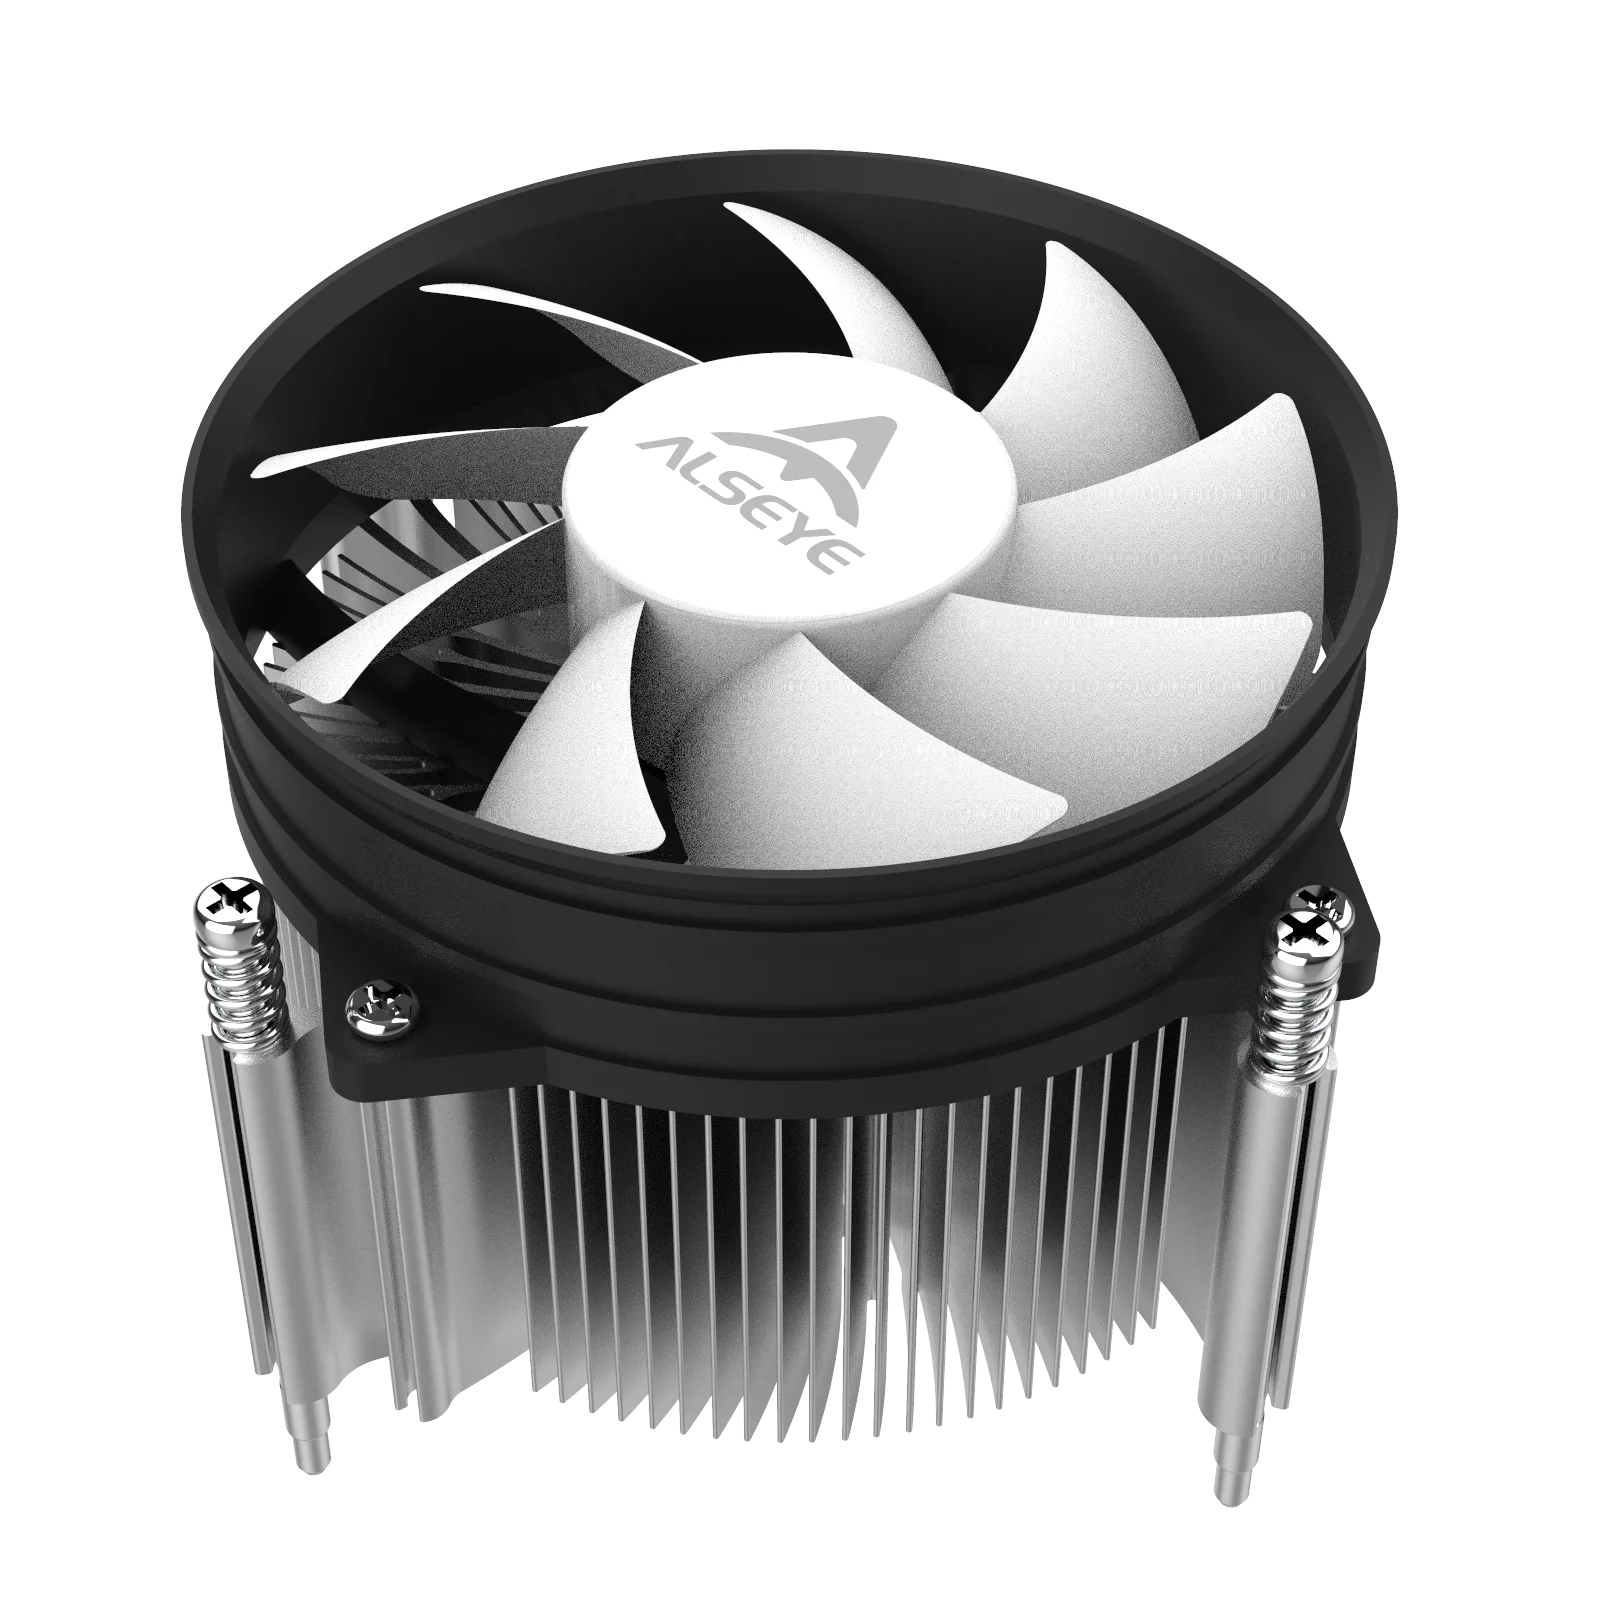 POWER LED / CPU / Heatsink Alu Kühlkörper 90 mm 